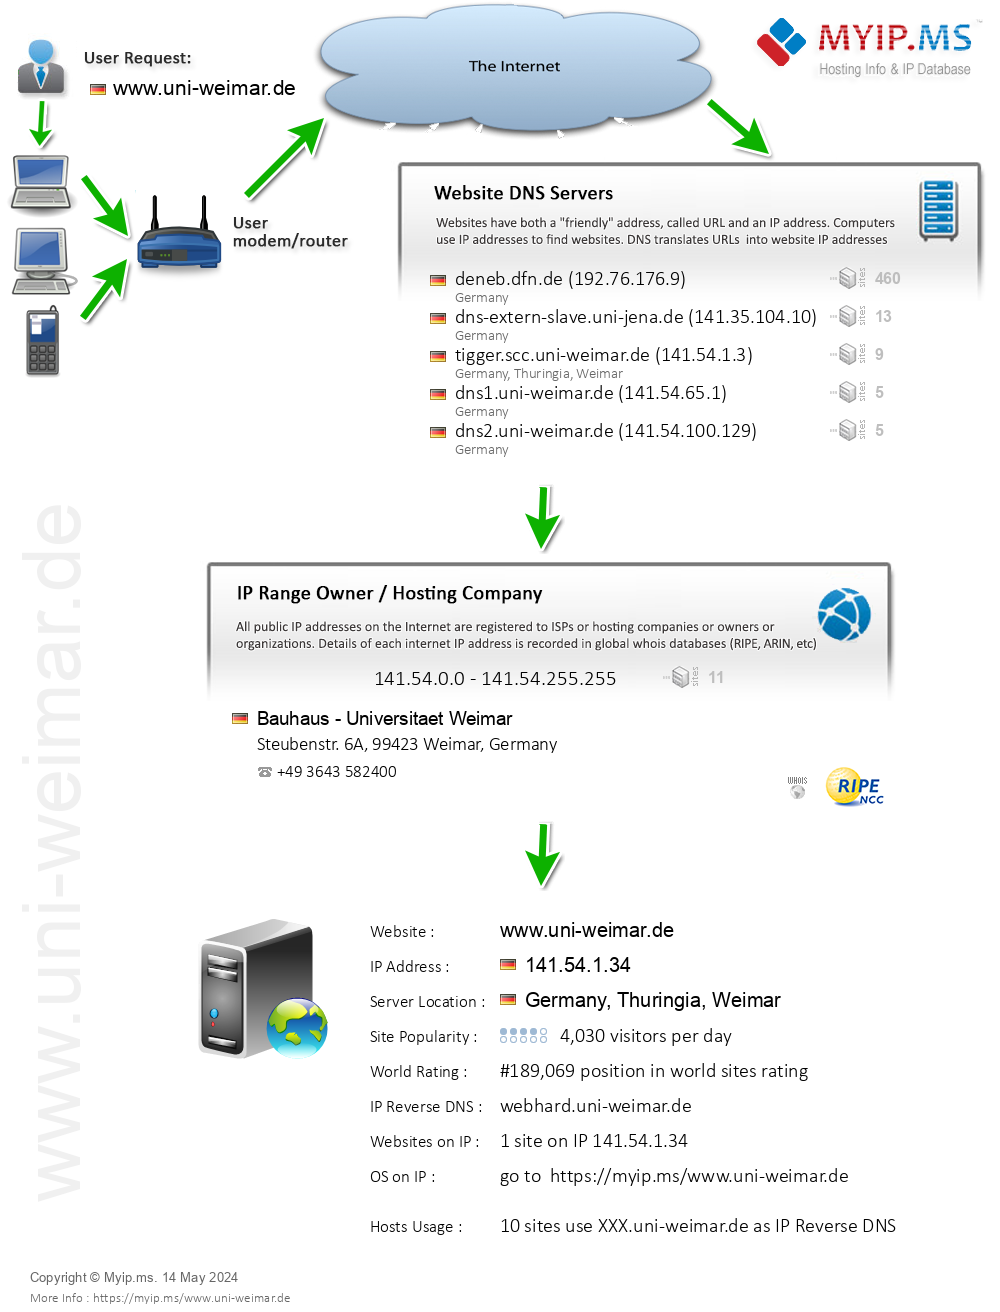 Uni-weimar.de - Website Hosting Visual IP Diagram